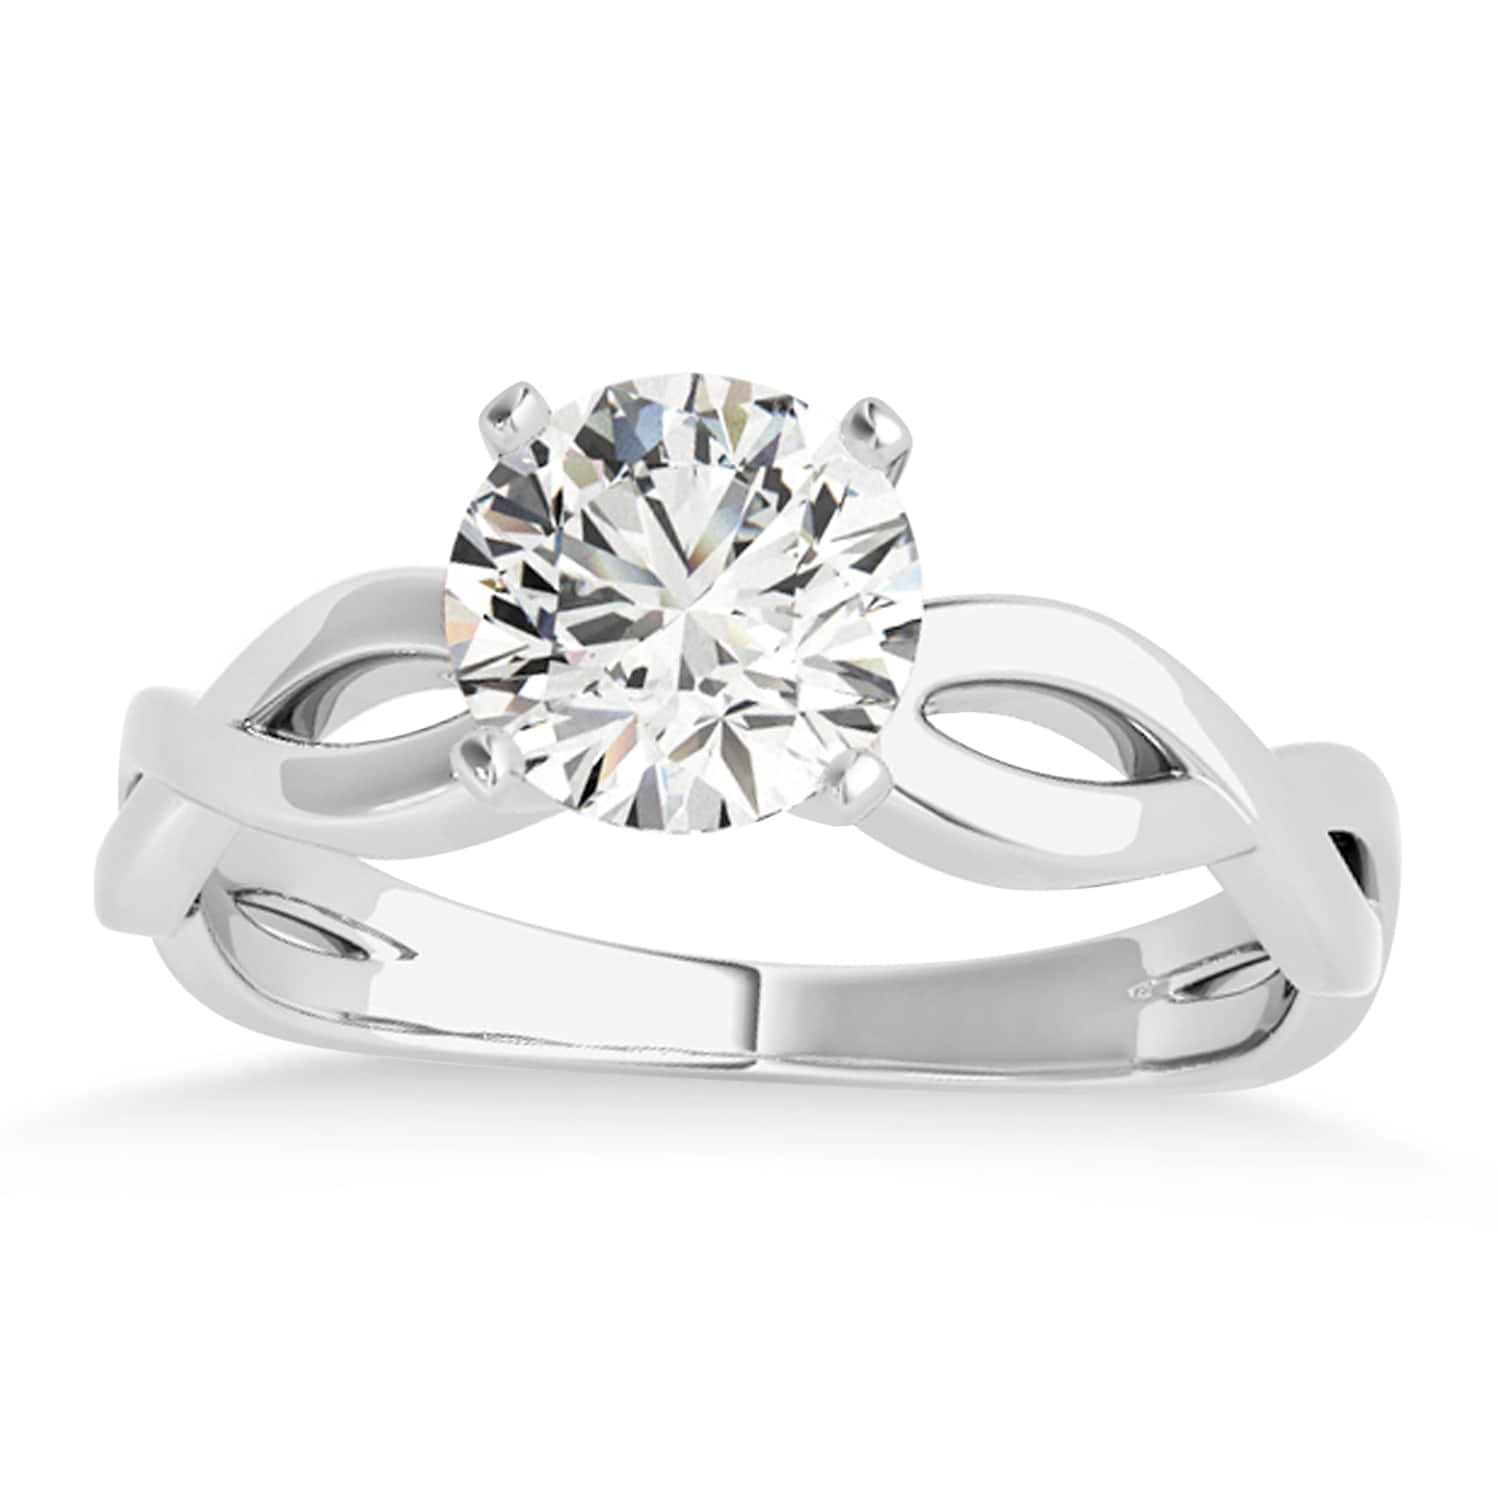 Diamond Twisted Shank Engagement Ring in Palladium